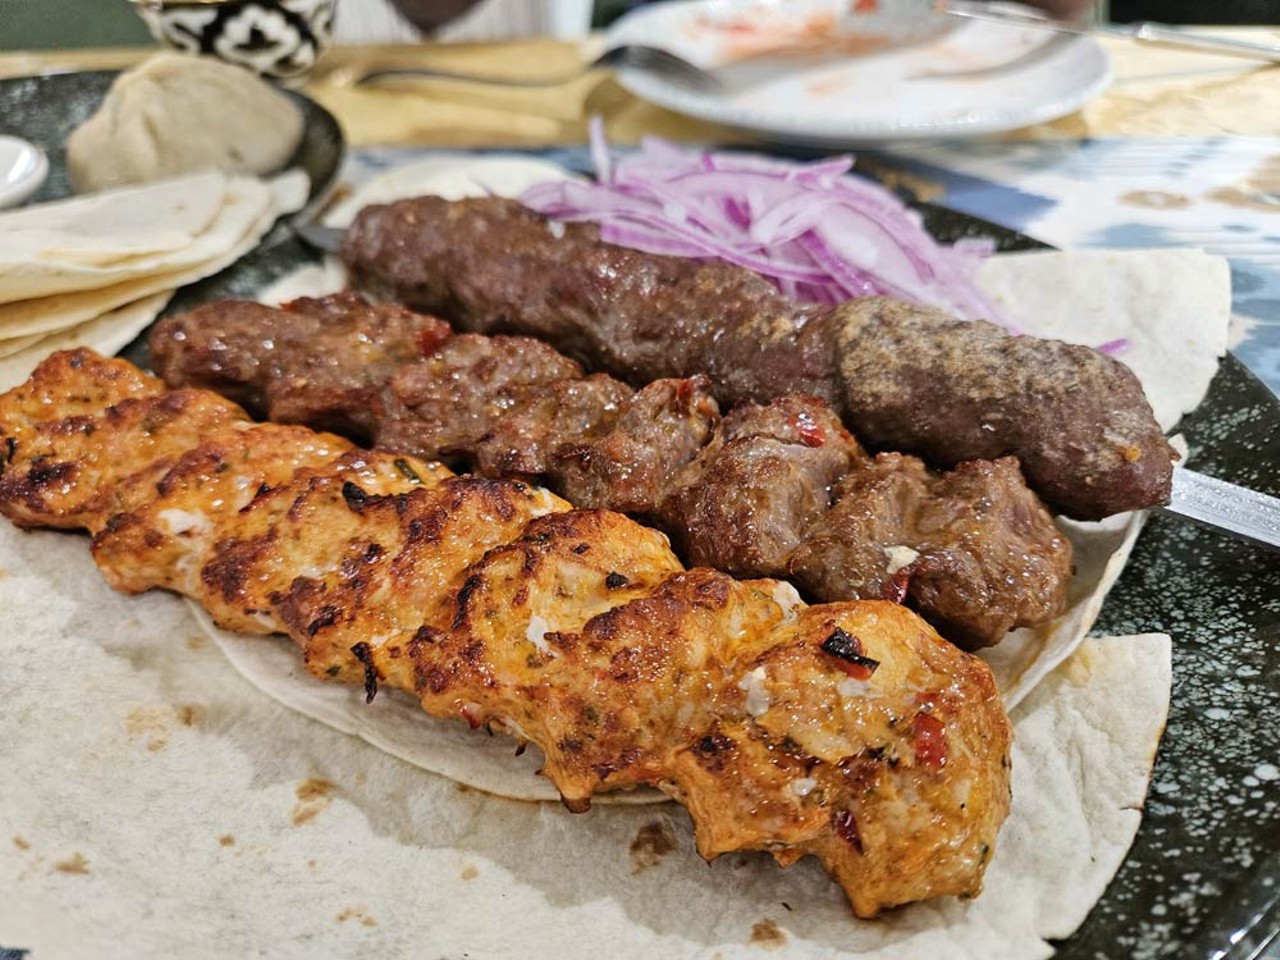       Caravan Uzbek & Turkish Cuisine: Adana kebabs  